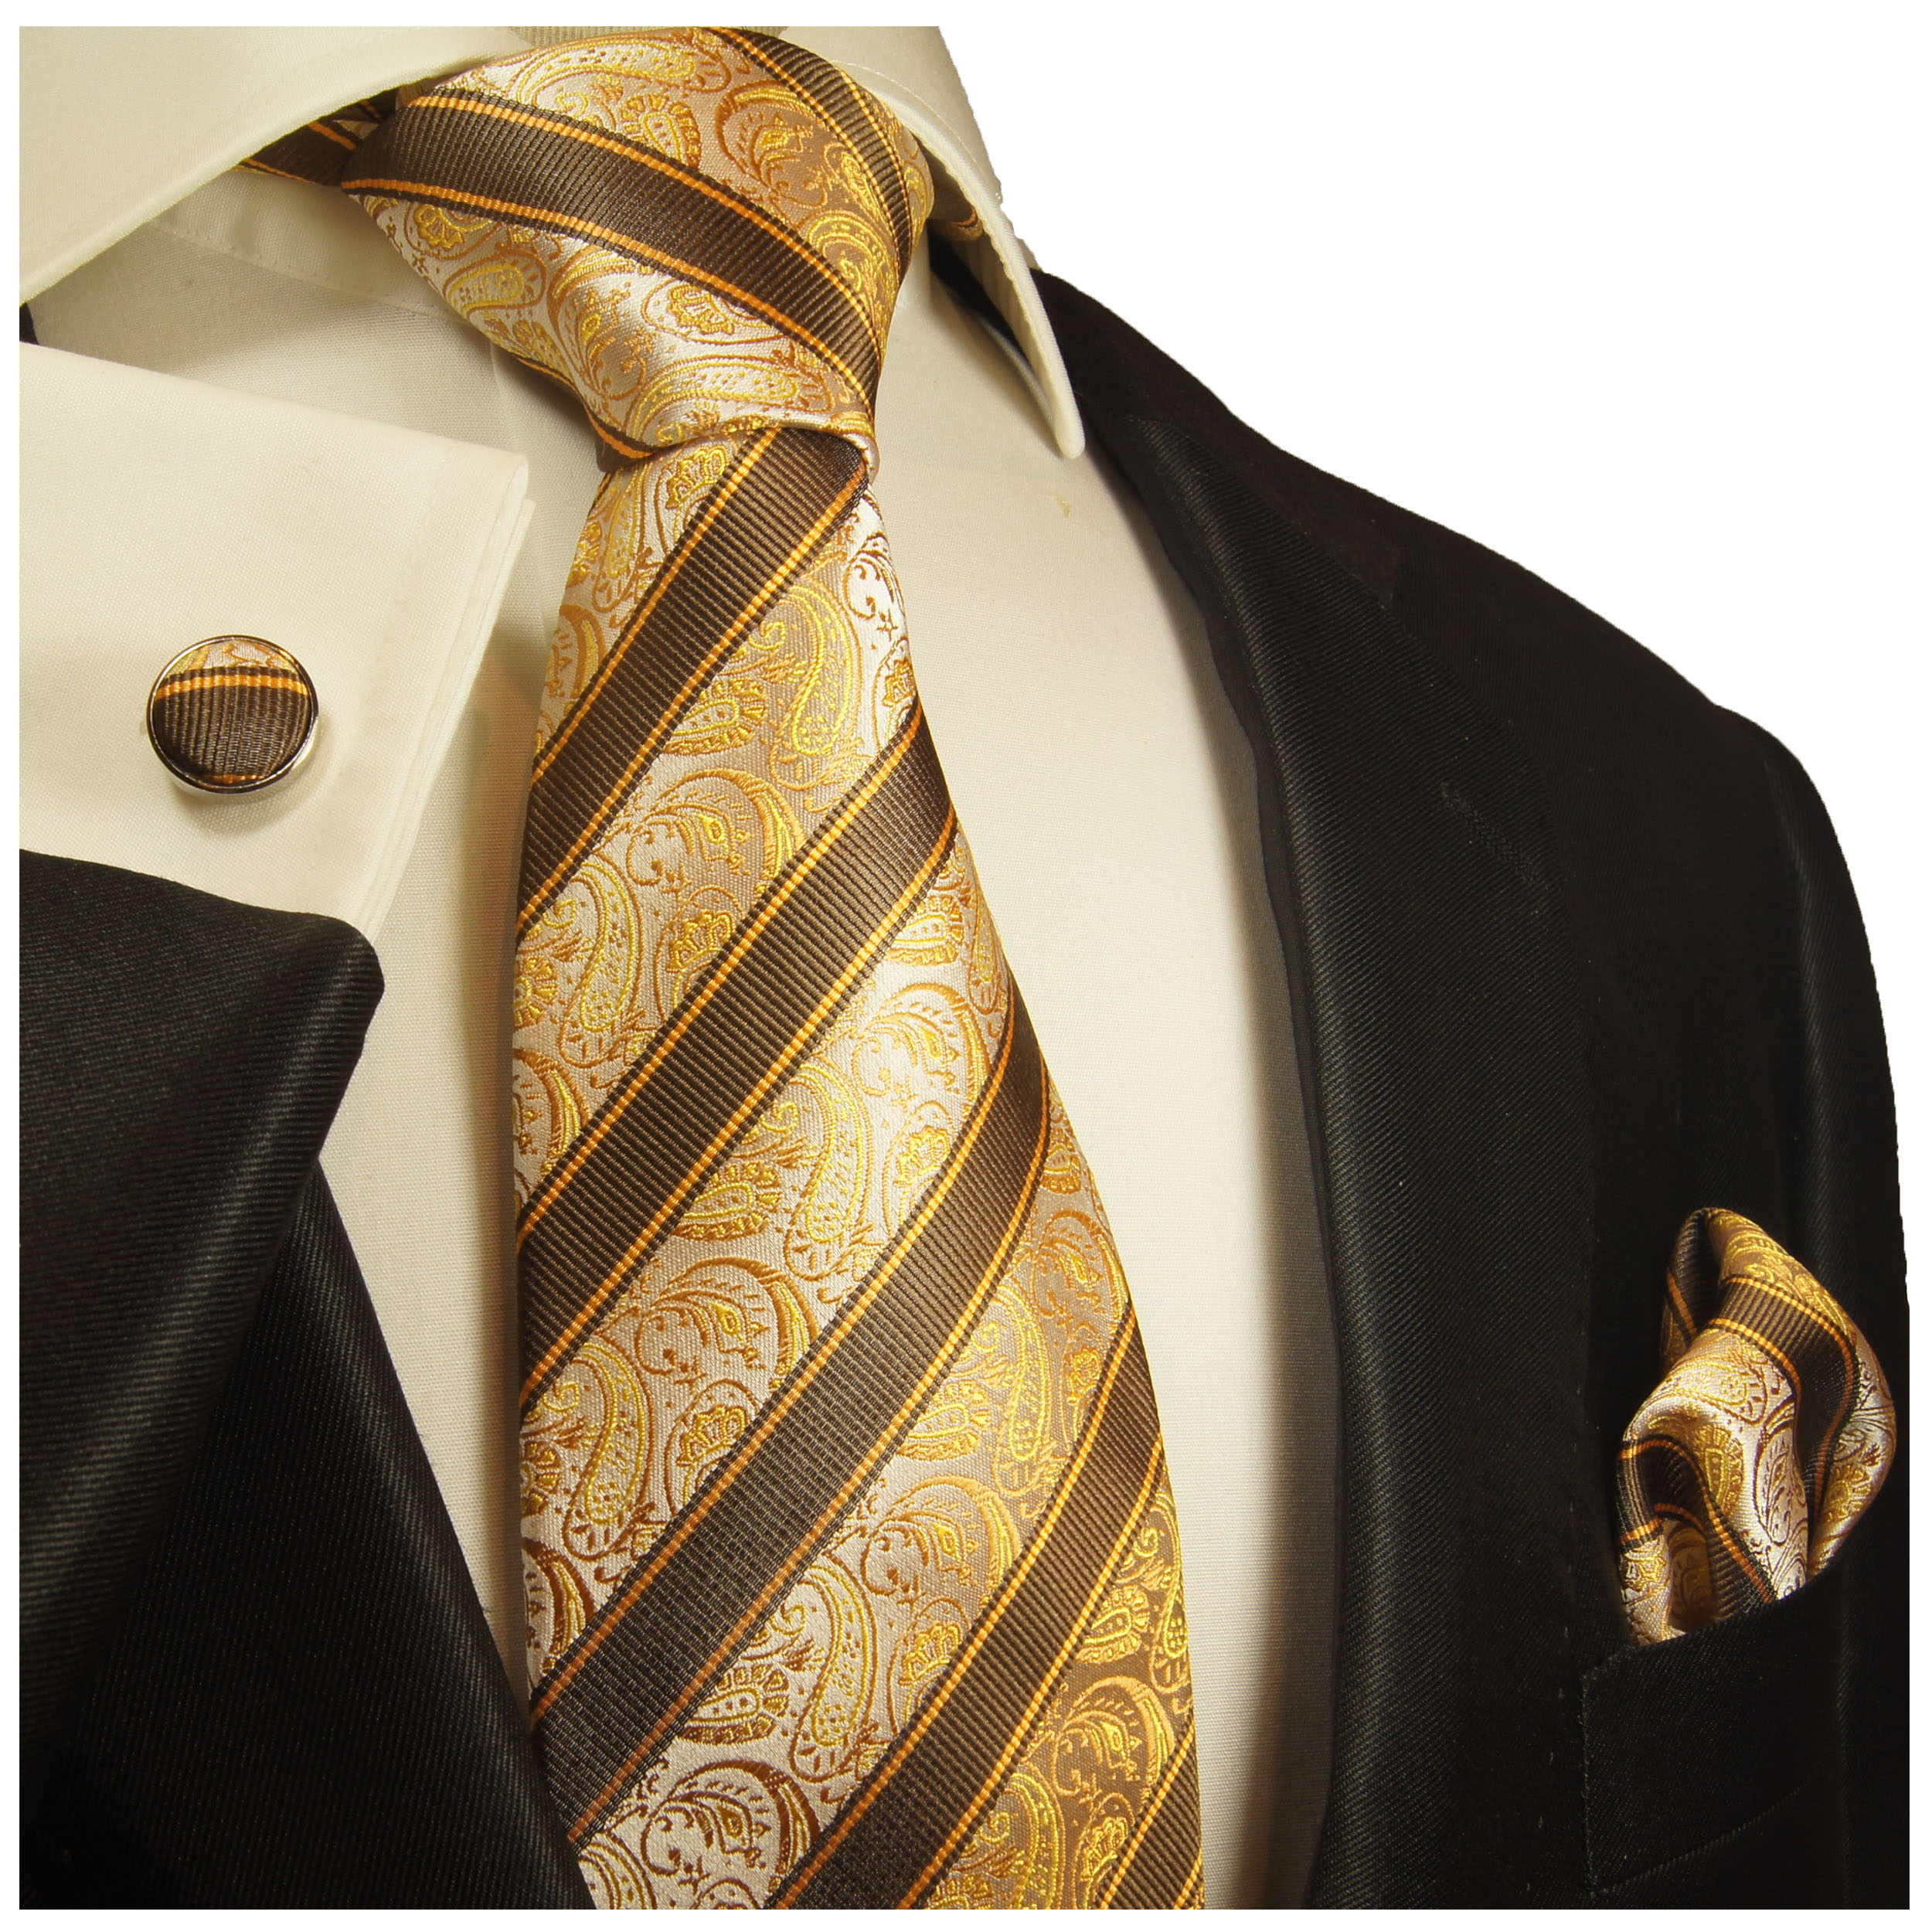 Brown tie paisley | Quality mens ties 2011 - Paul Malone Shop